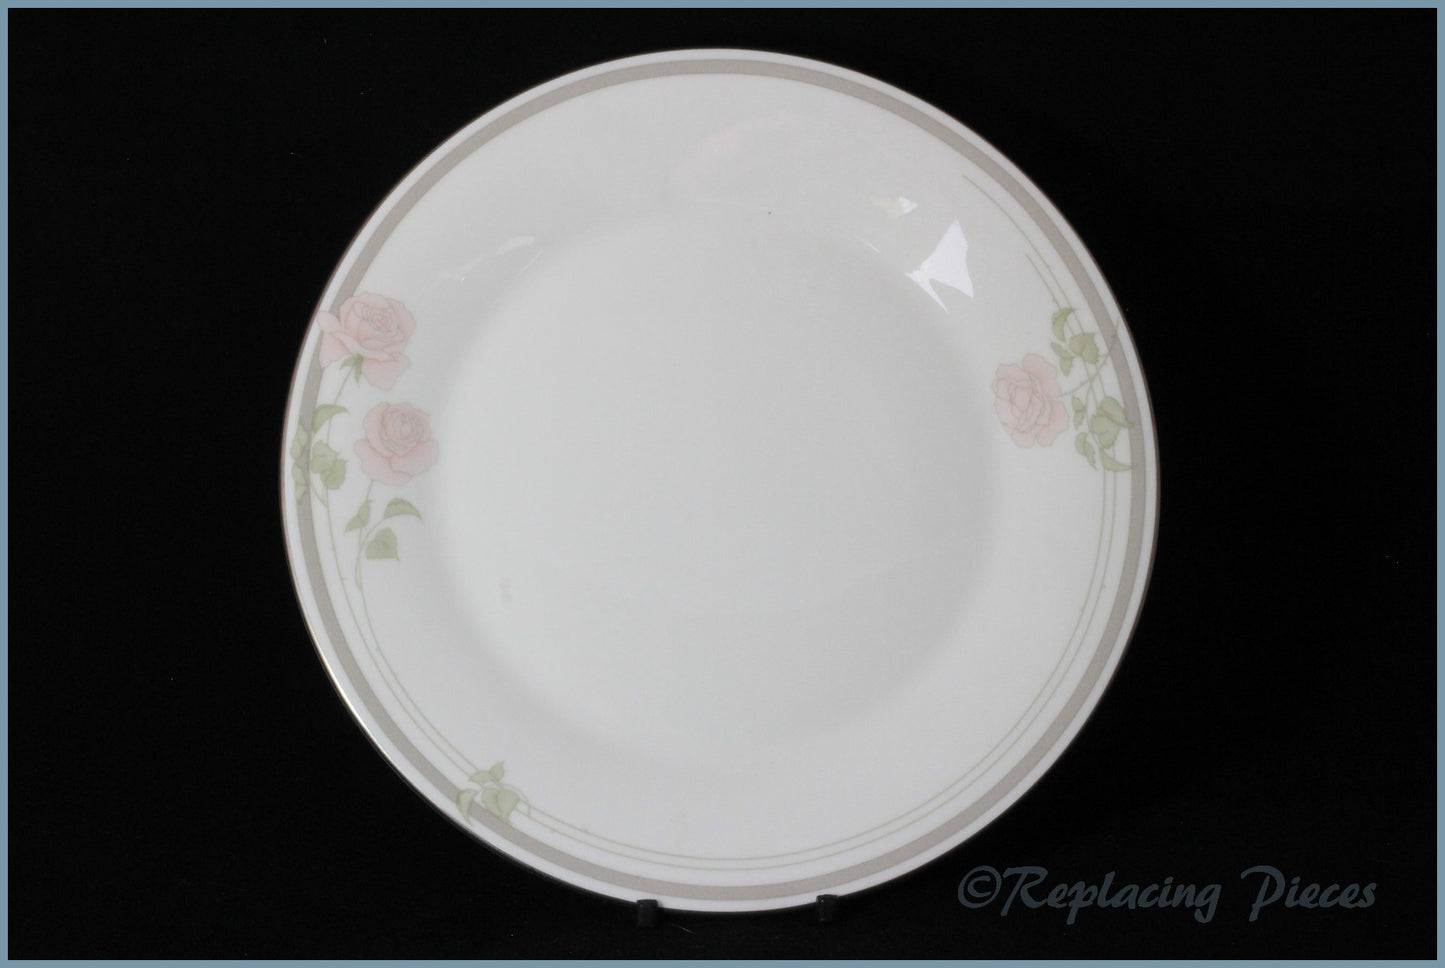 Royal Doulton - Twilight Rose (H5096) - 6 5/8" Side Plate